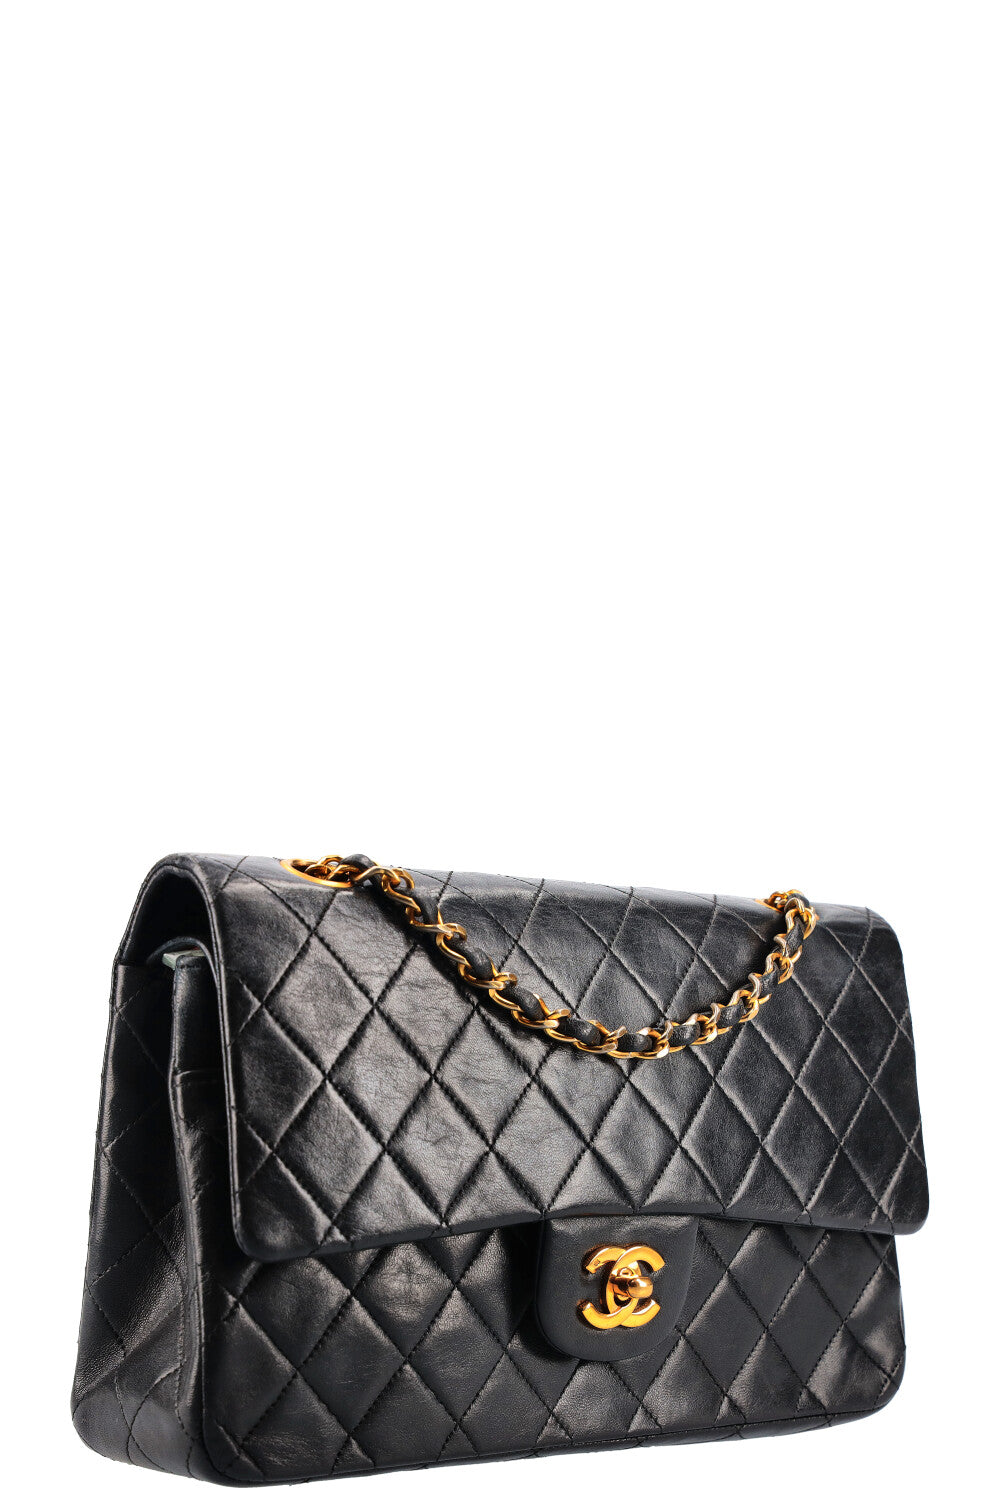 chanel classic handbag black medium